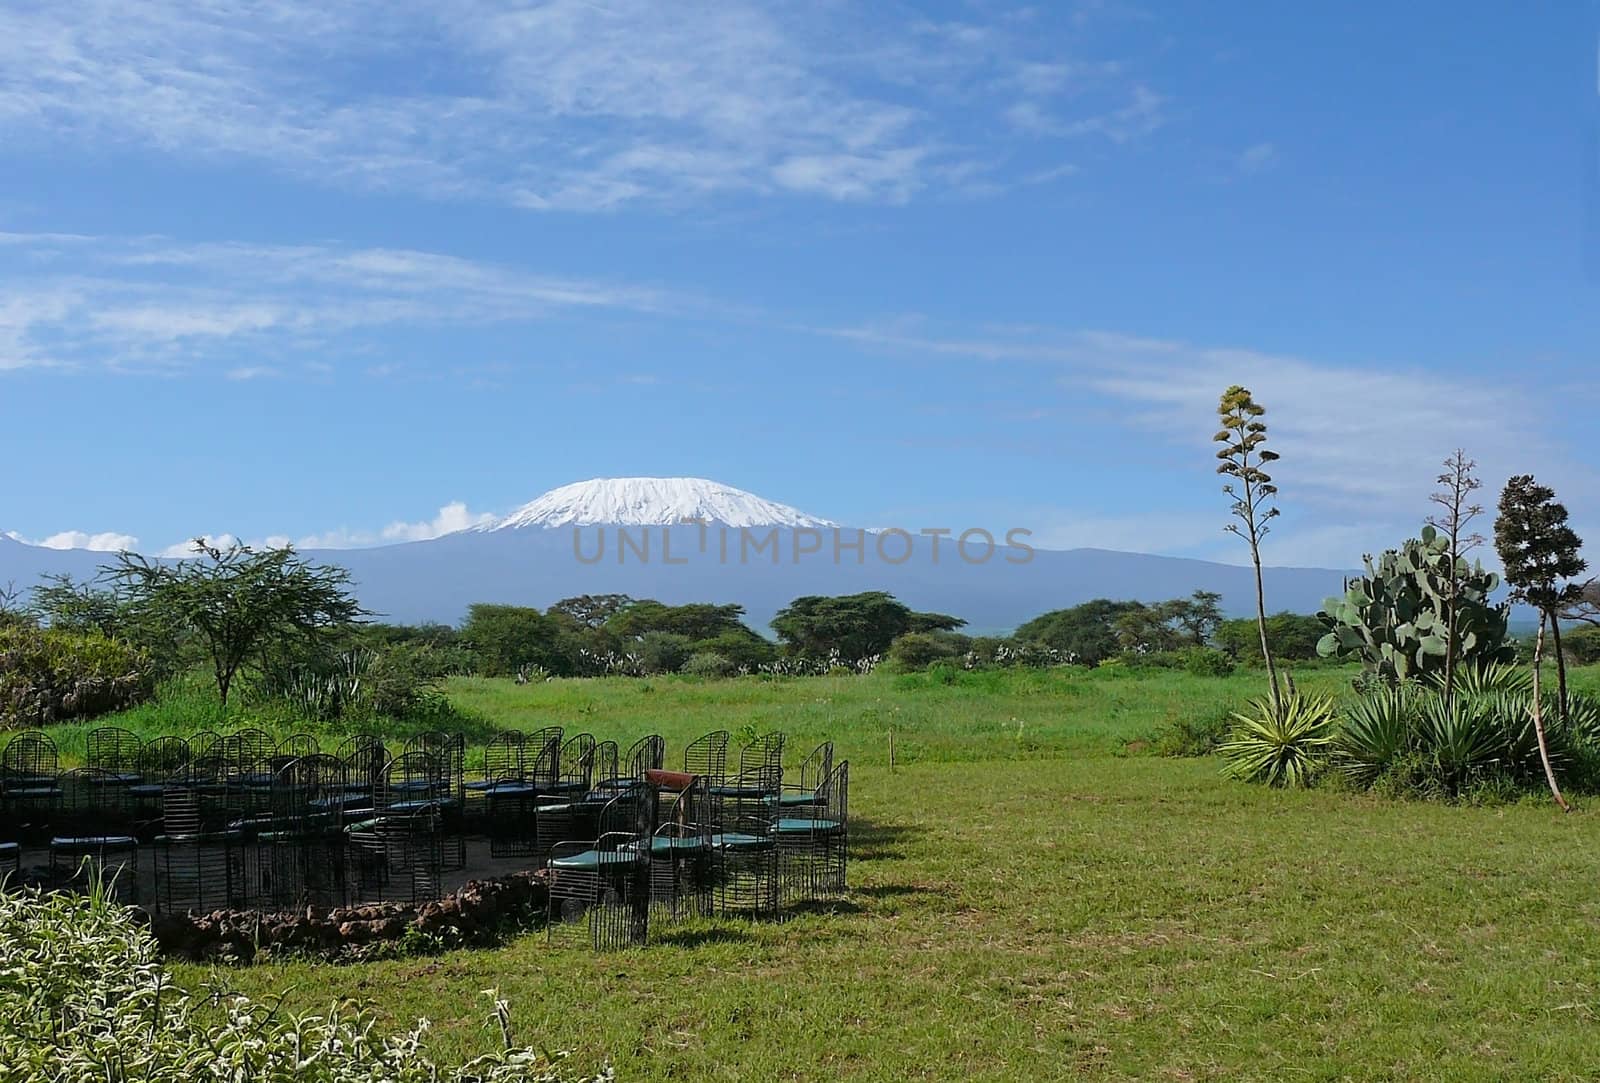 Landscape with snow-covered peak of Kilimanjaro in Kenya